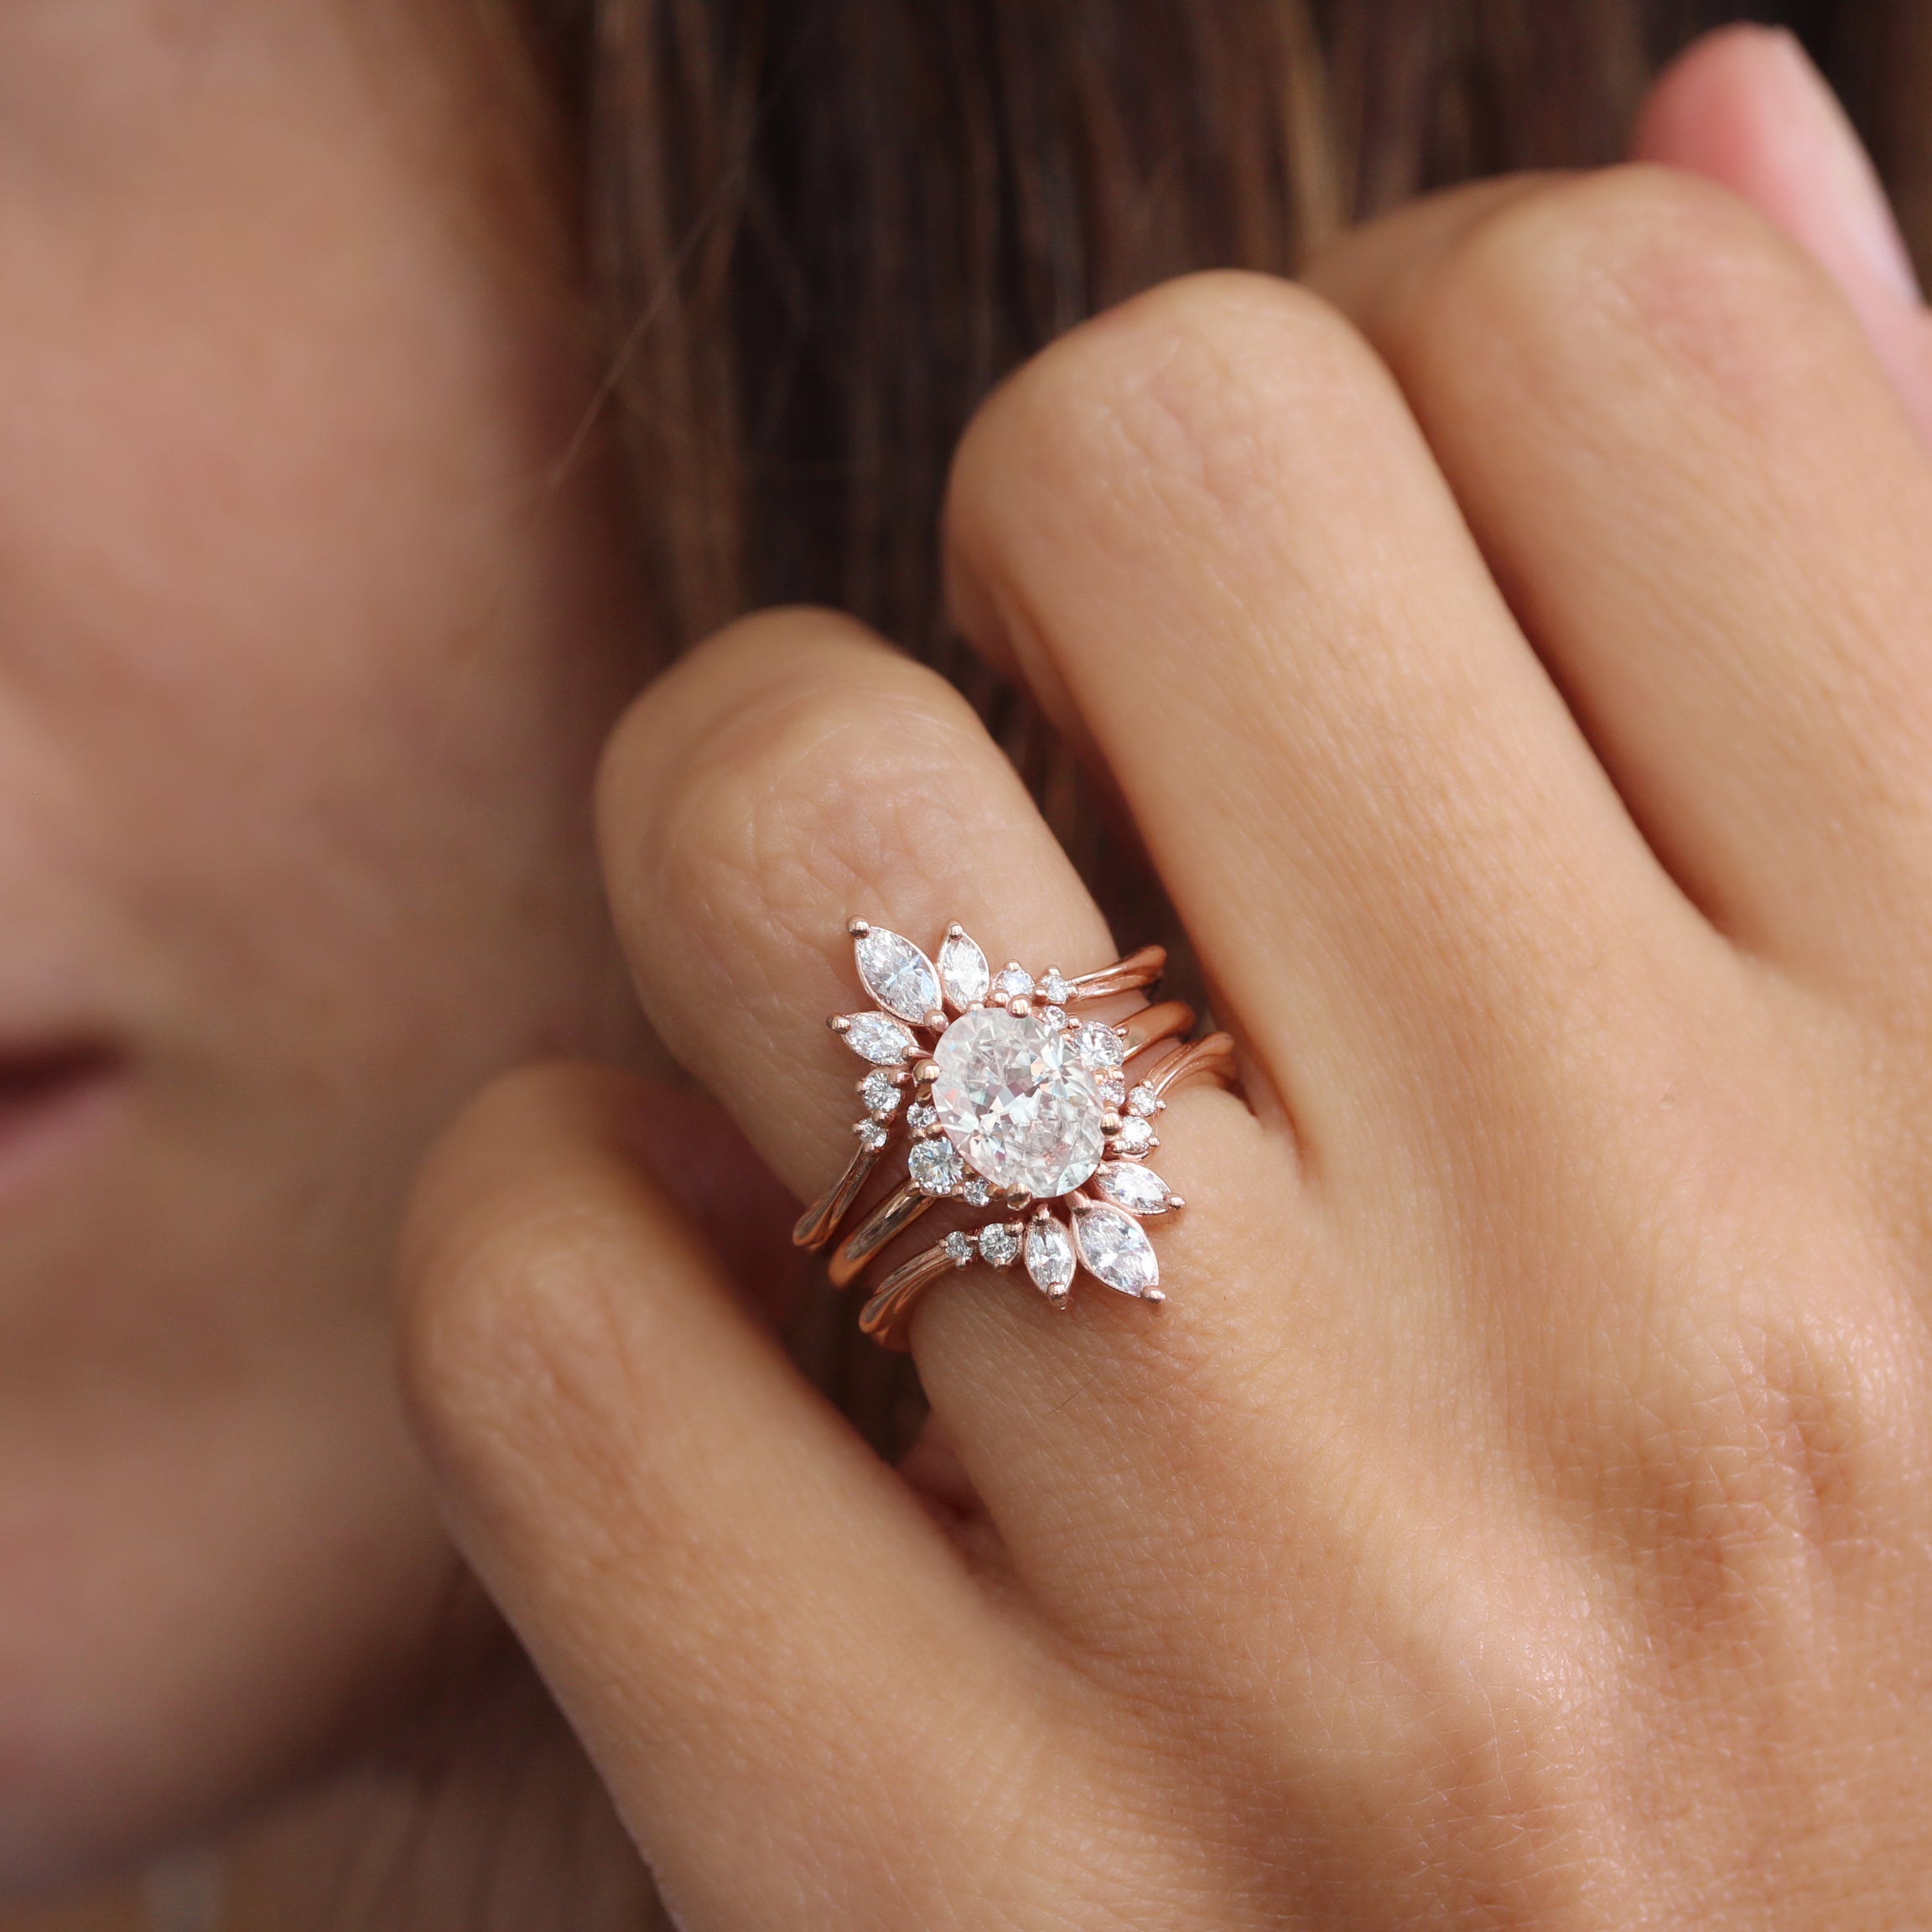 Oval Diamond Engagement Ring With Diamond Ring Guard Enhancer, Bridal Ring Set - Isabella & Danielle